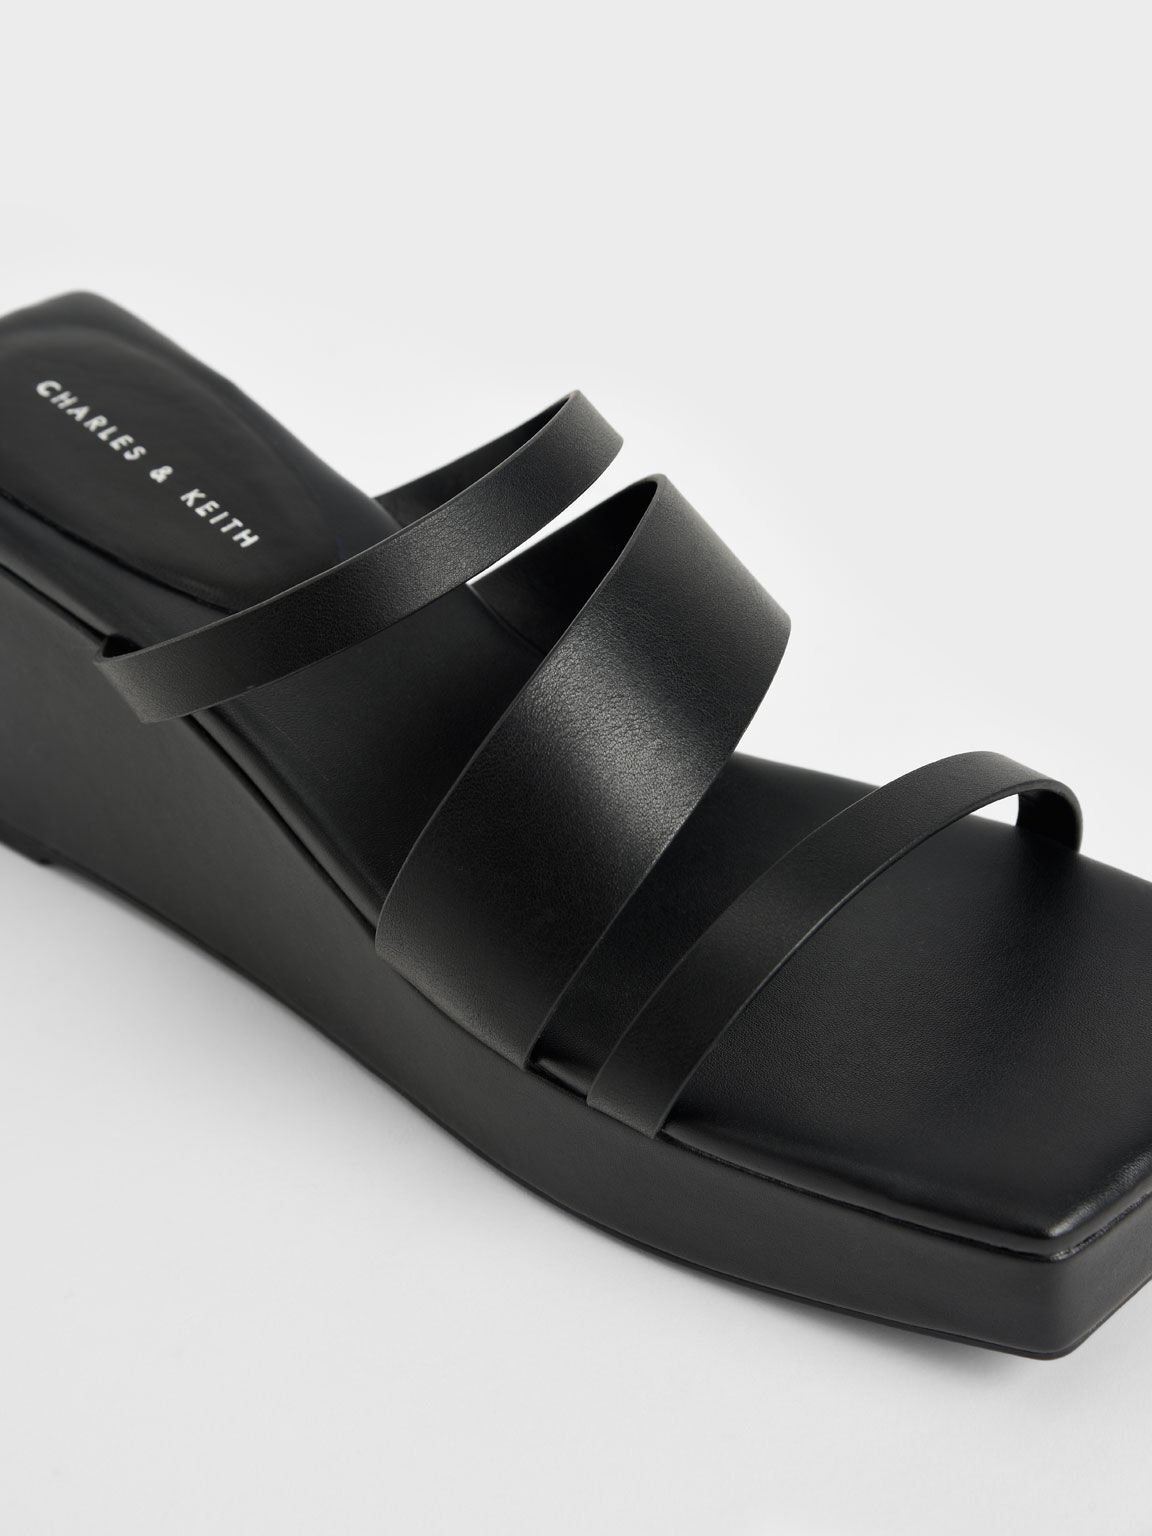 Sepatu Wedges Platform Asimetris, Black, hi-res